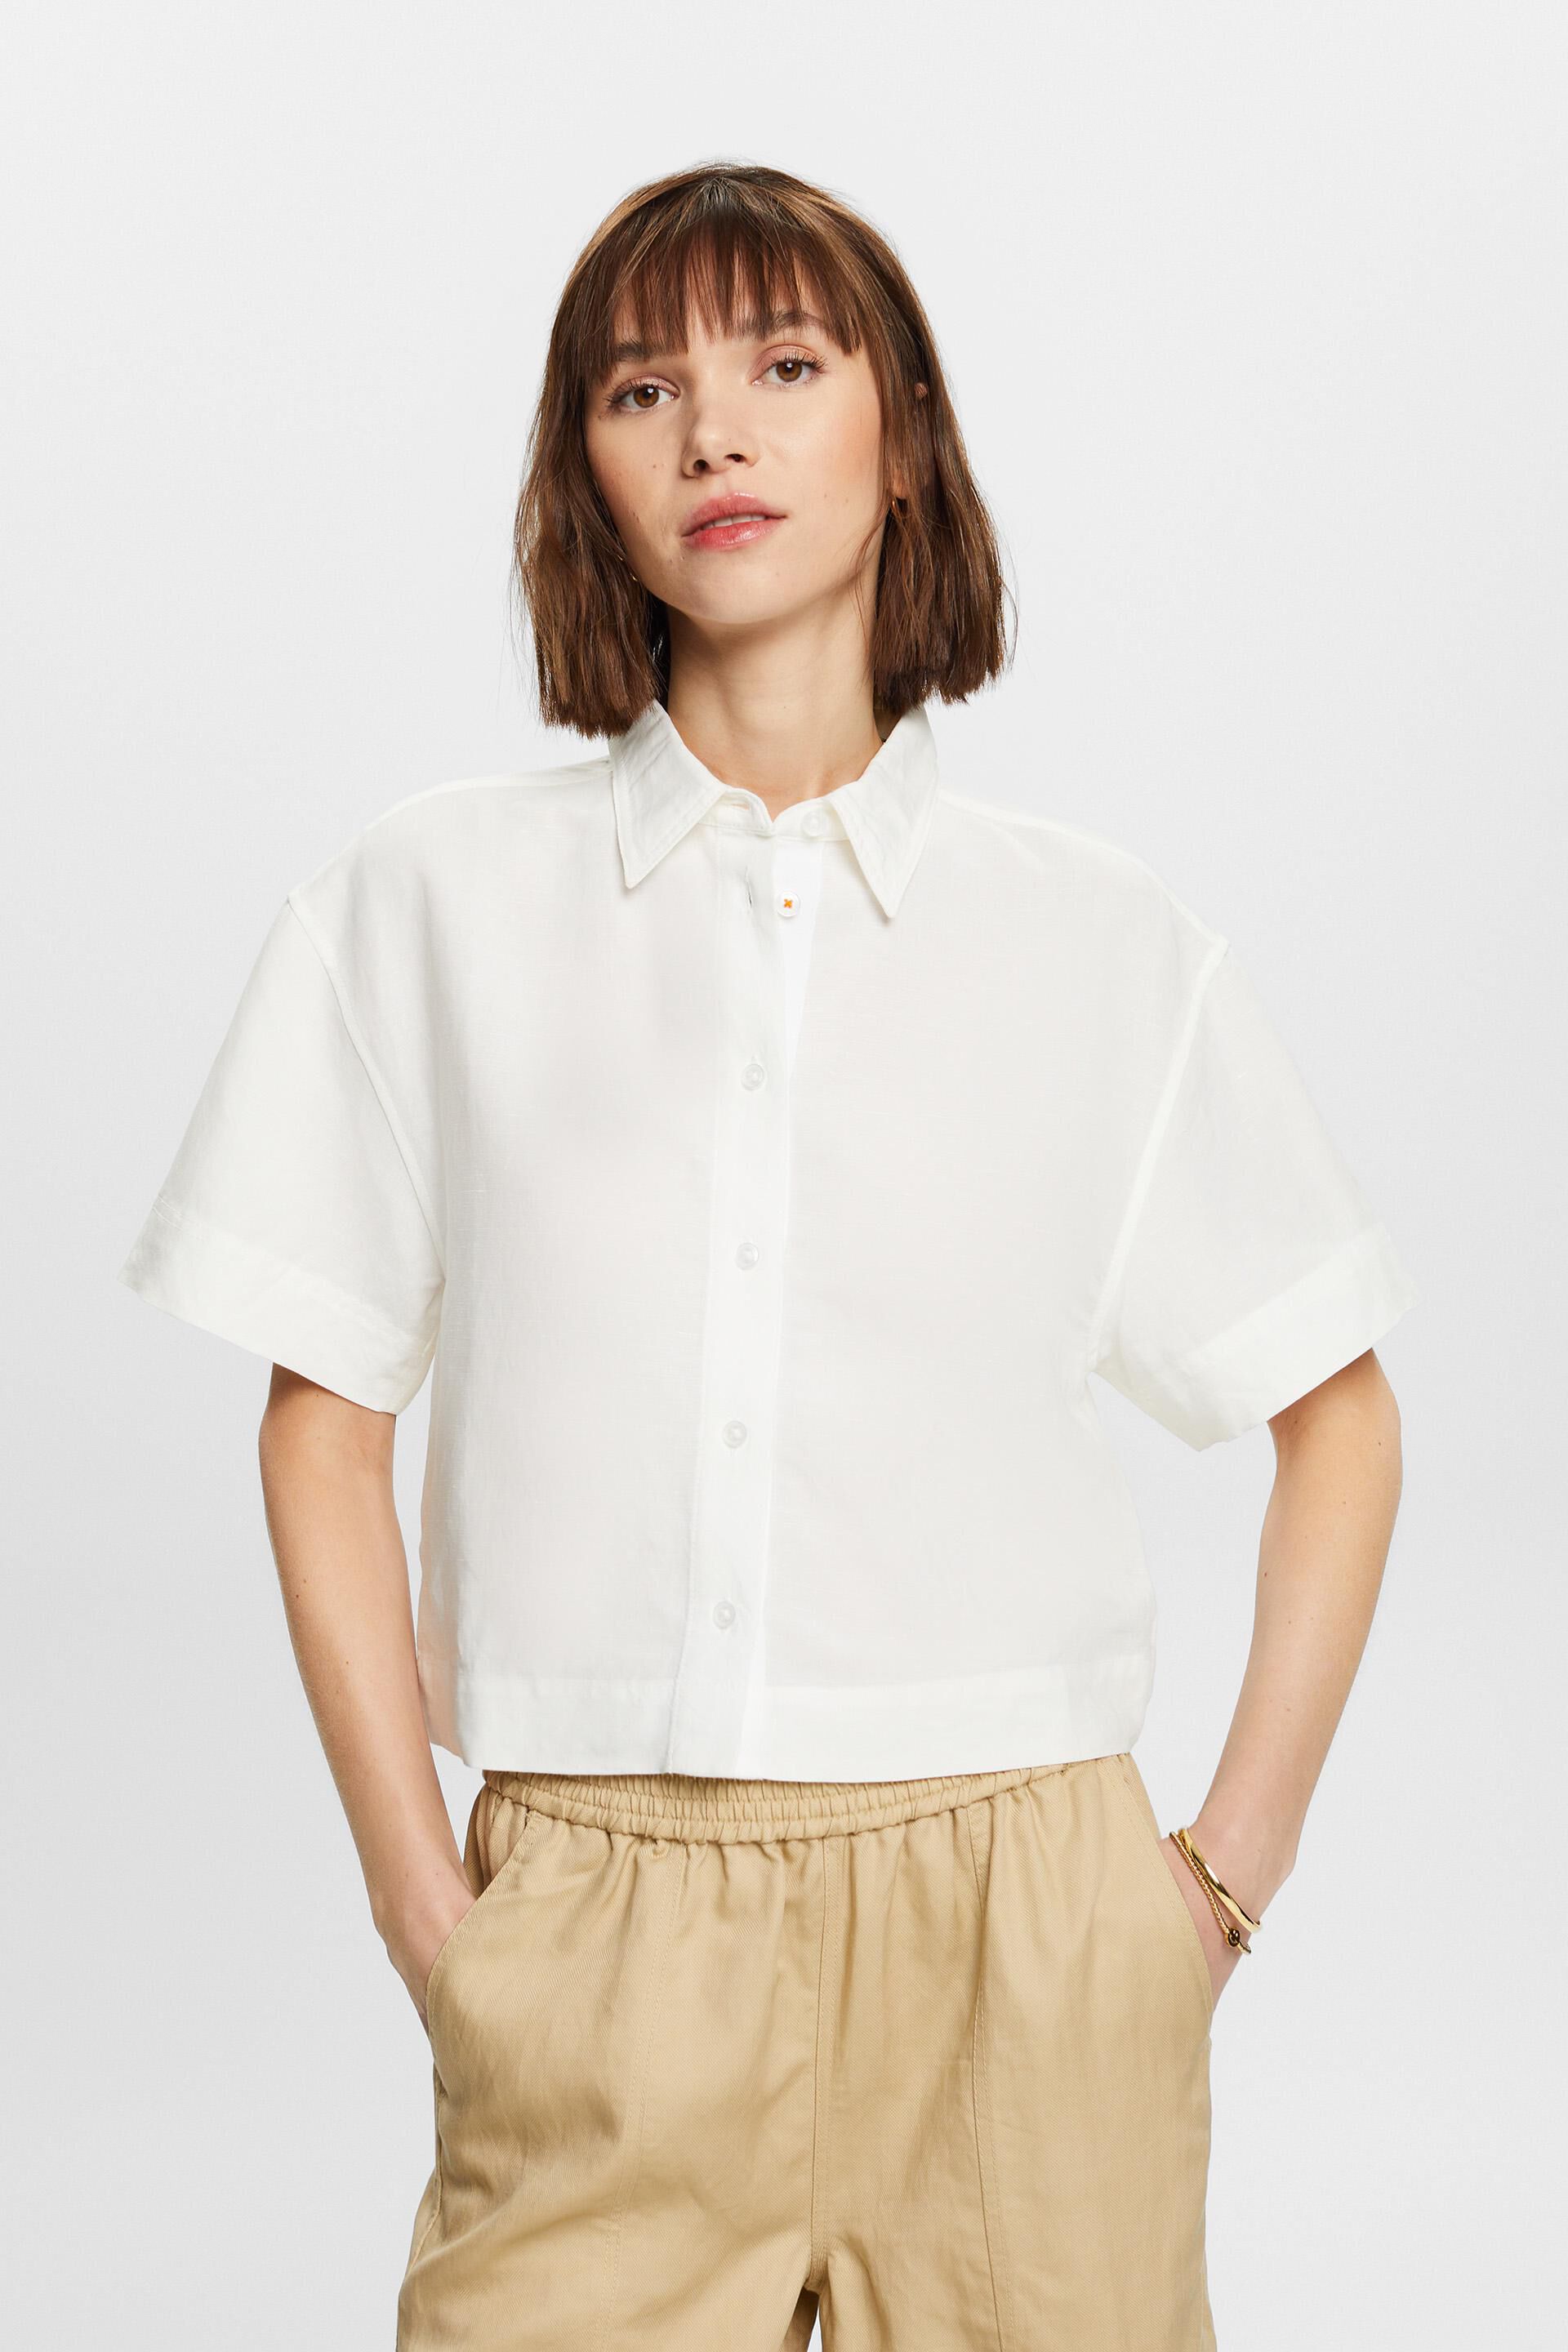 Esprit blend blouse, linen shirt Cropped